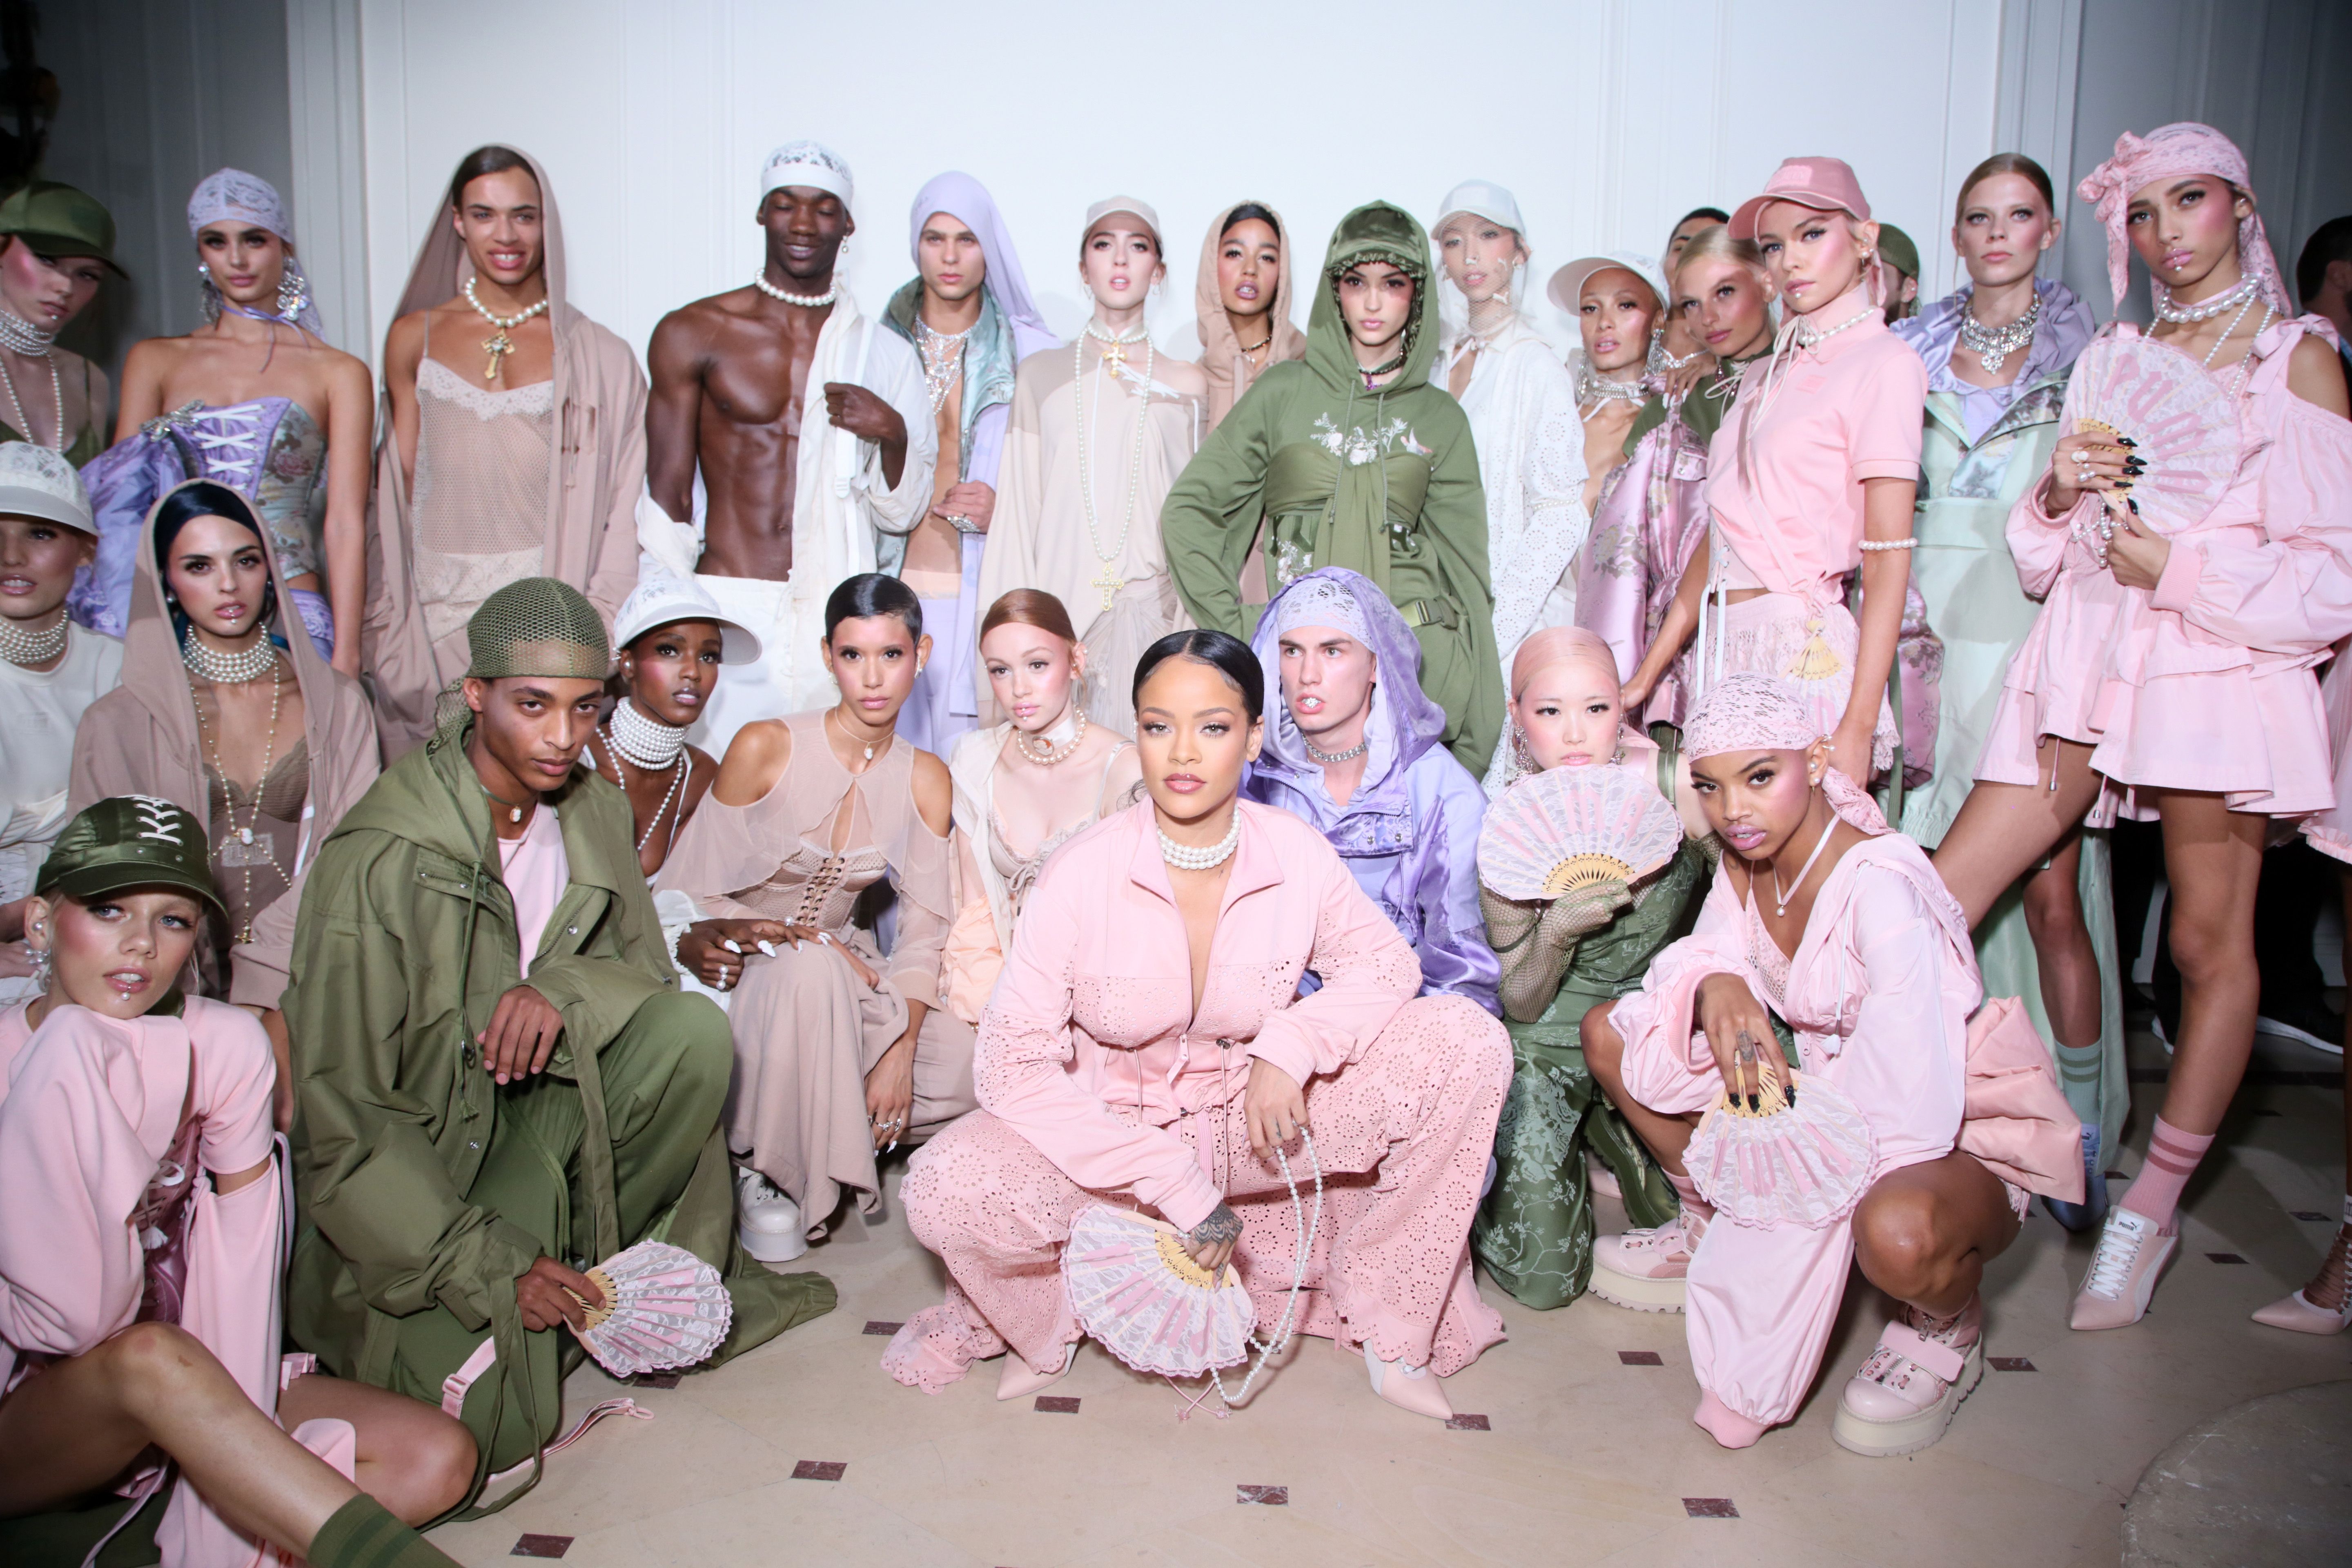 Rihanna's many fashion collaborations and campaigns